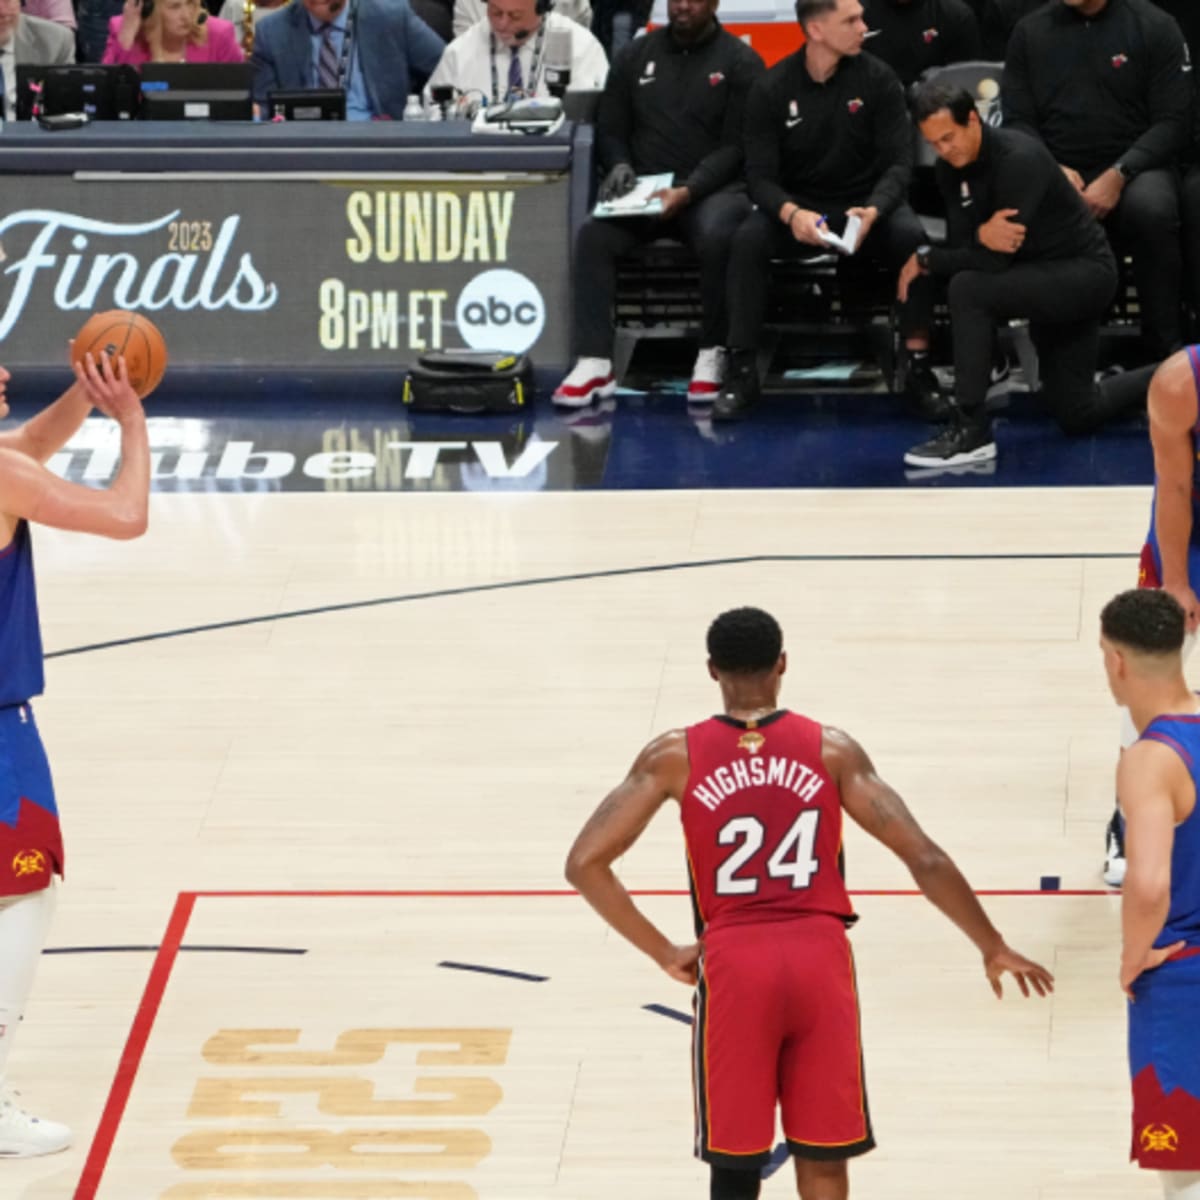 NBA Finals Basketball Fans Have 1 Major Complaint About ESPNs Presentation